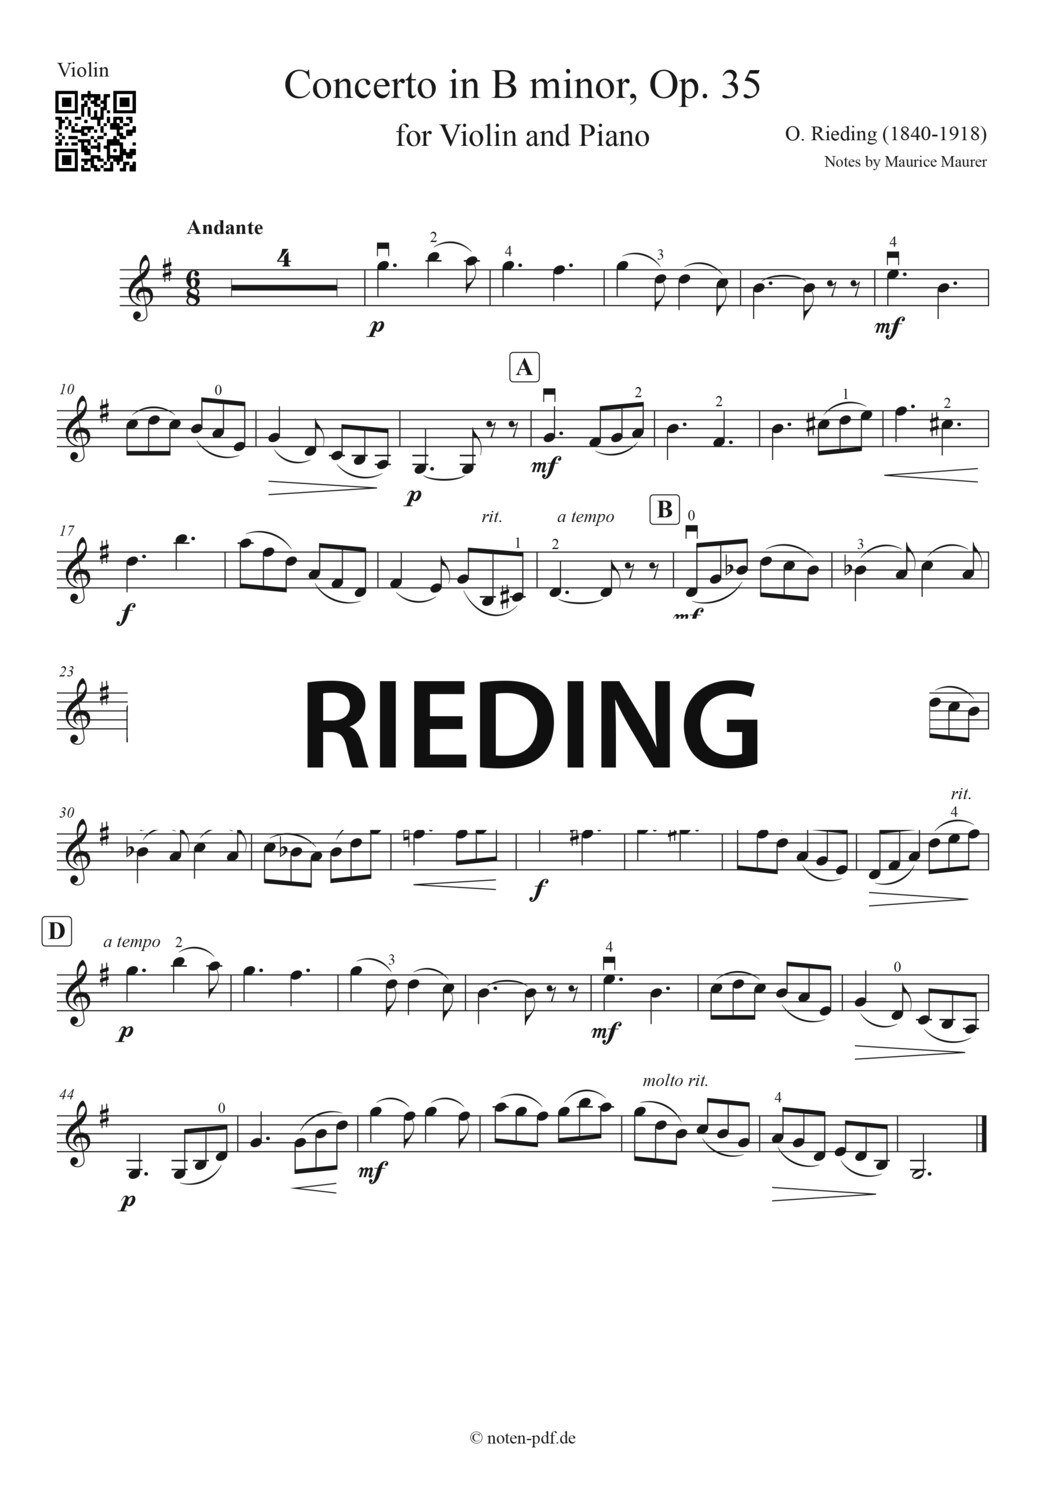 Rieding: Concerto in B minor Op. 35, 2. Movement